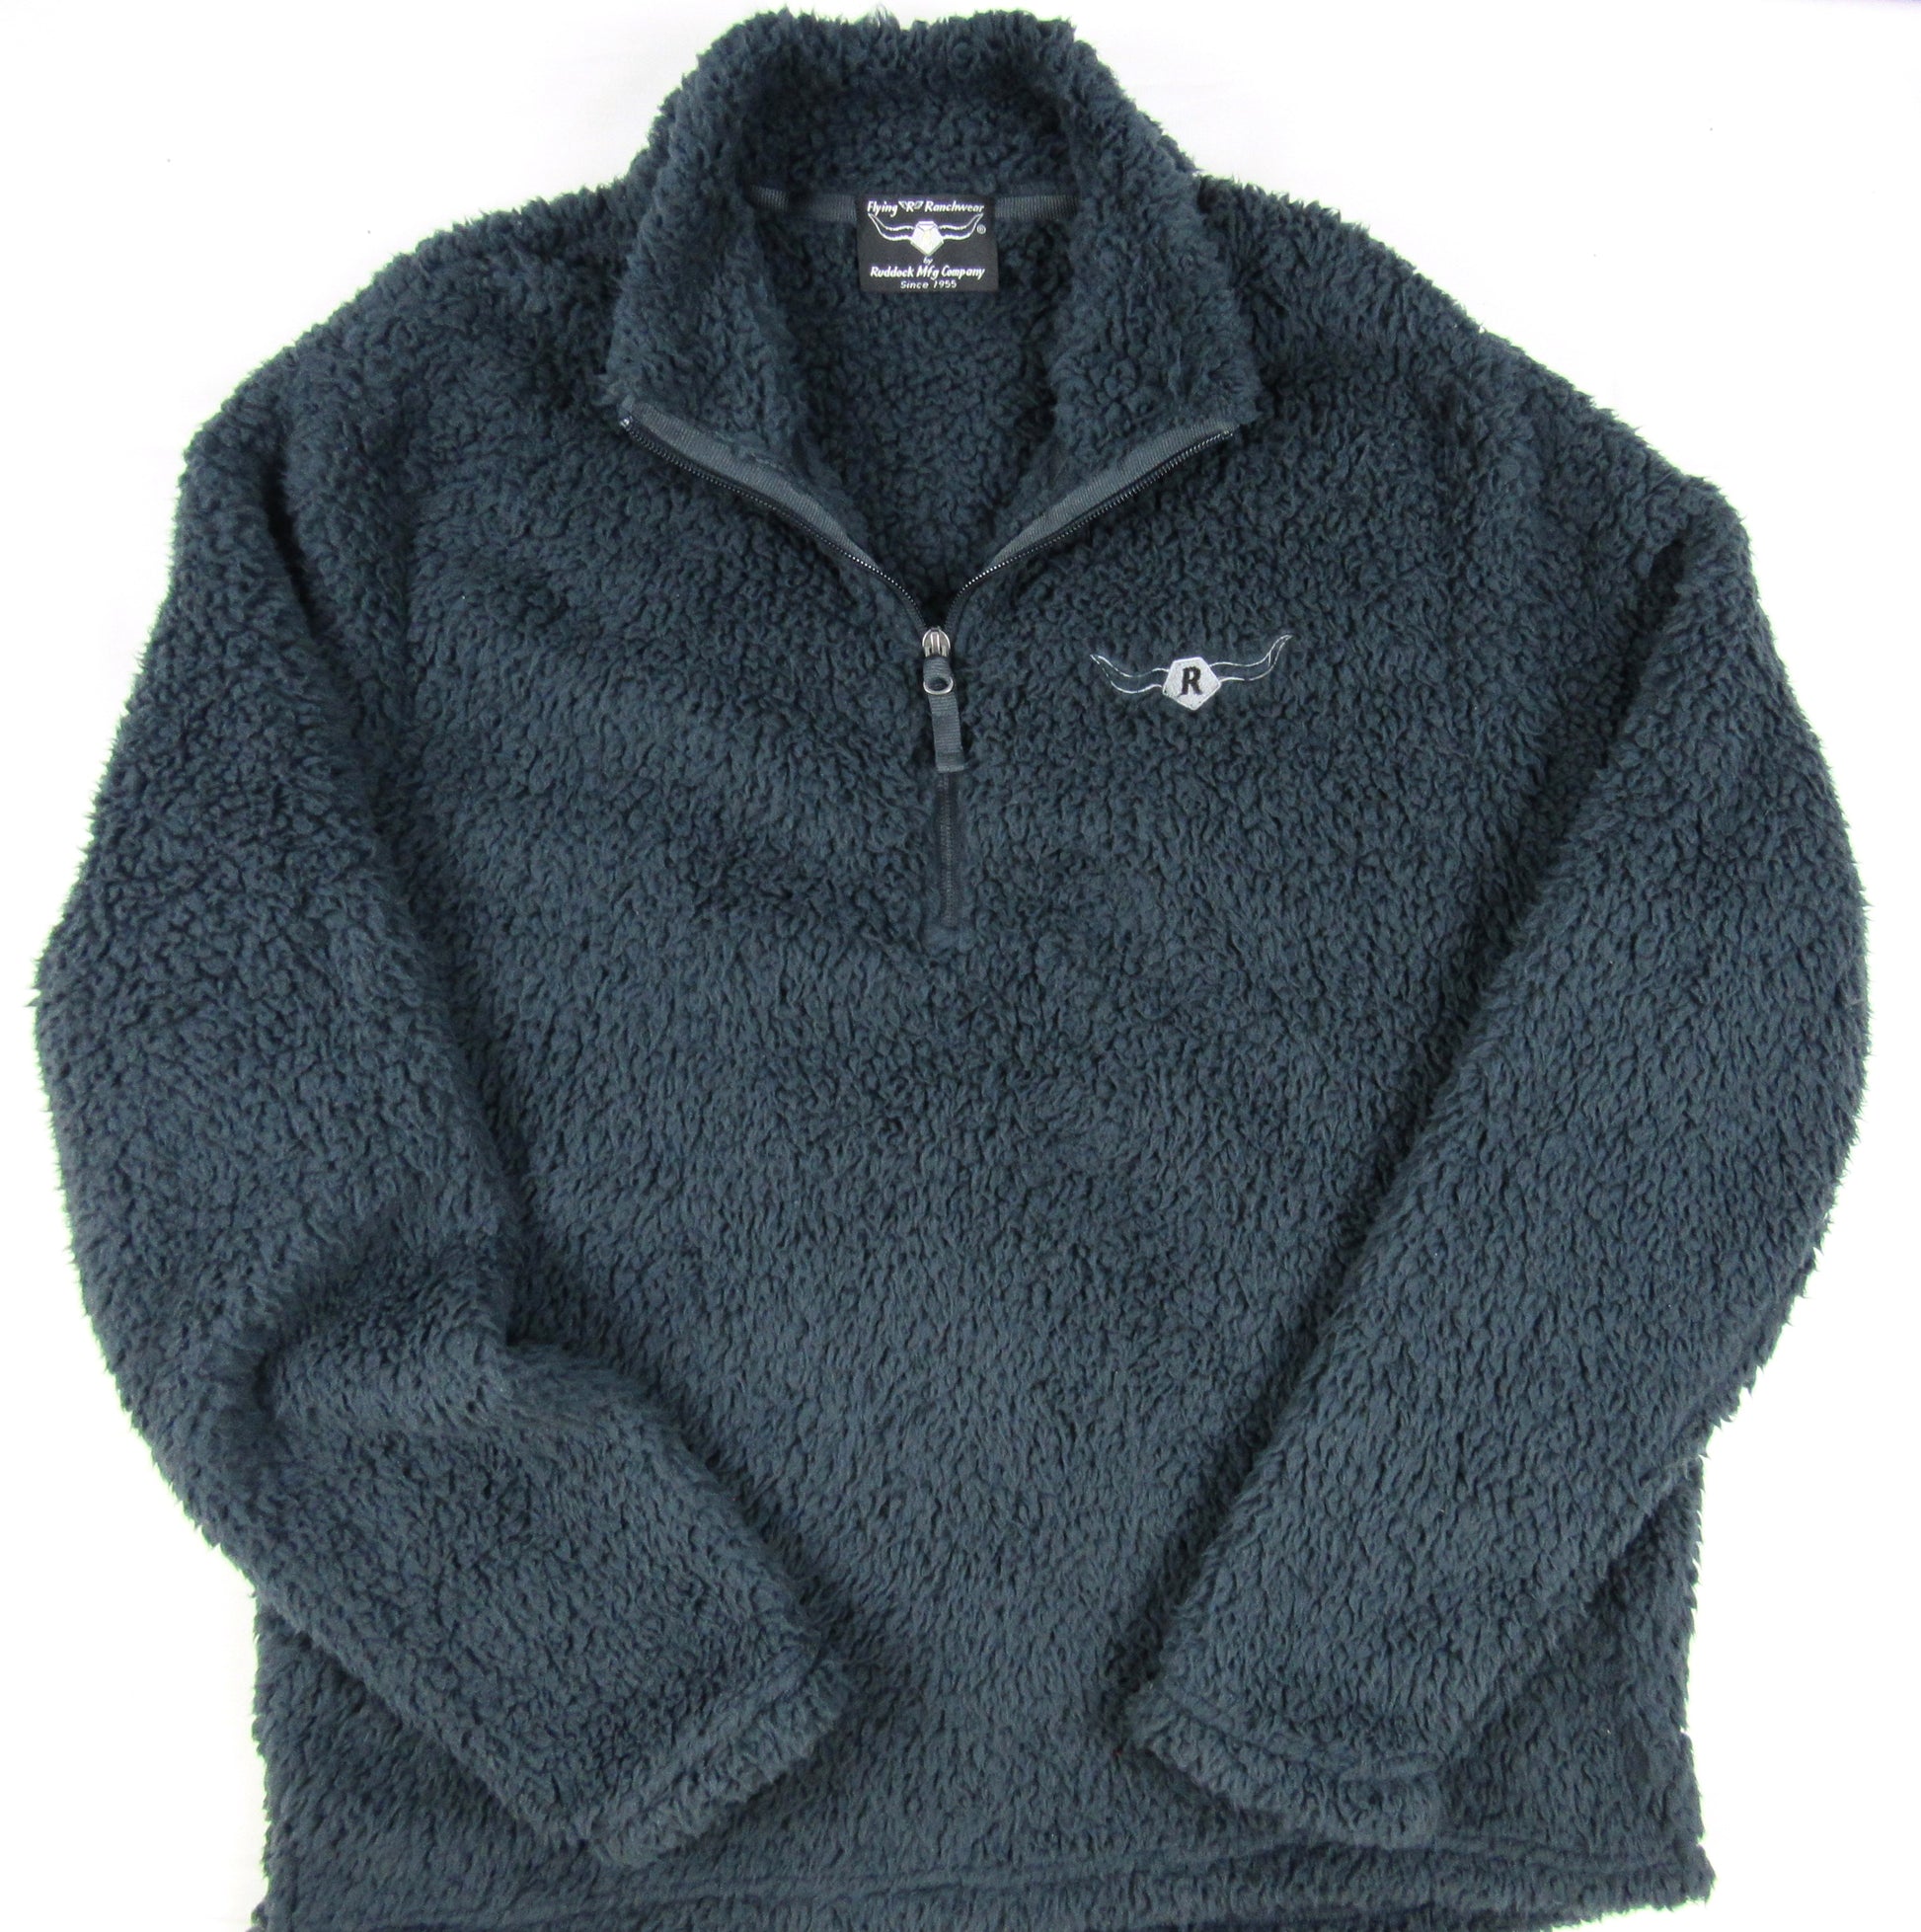 Charcoal gray sherpa fleece with 1/4 zipper by Flying R Ranchwear